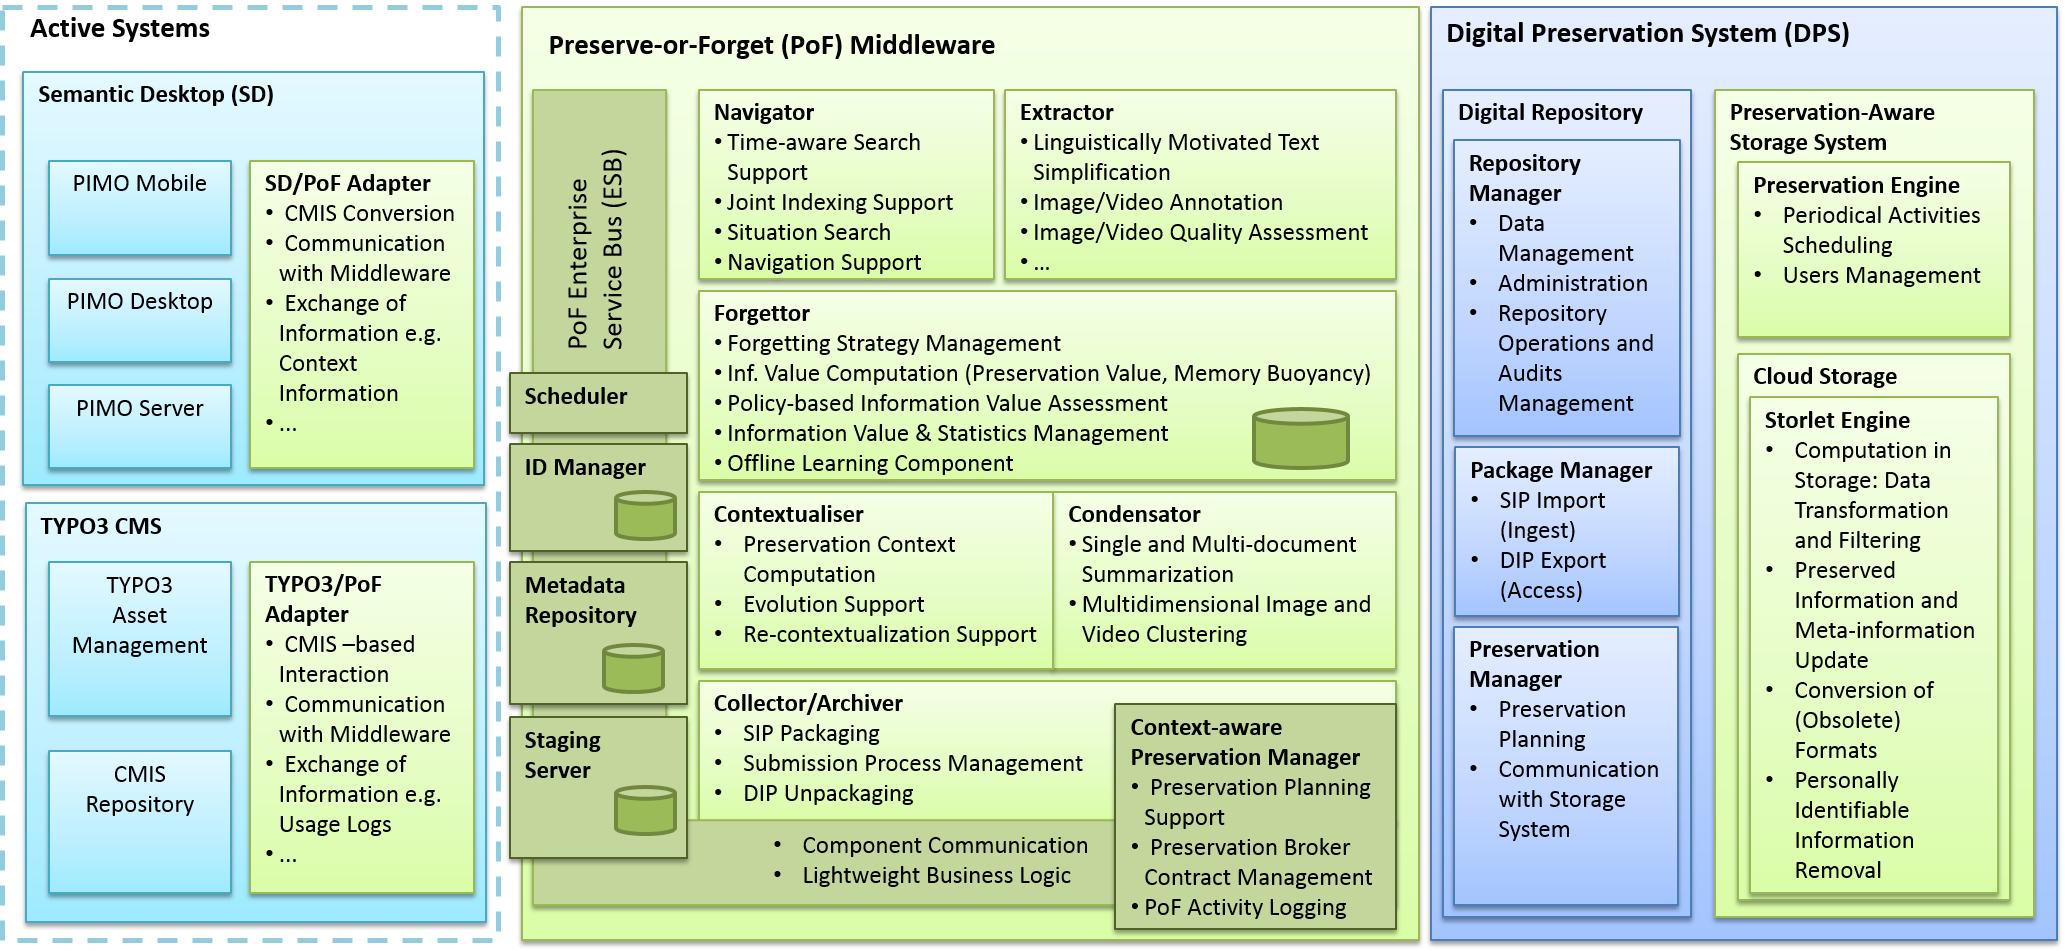 ForgetIT Preserve-or-Forget (PoF) Framework architecture diagram